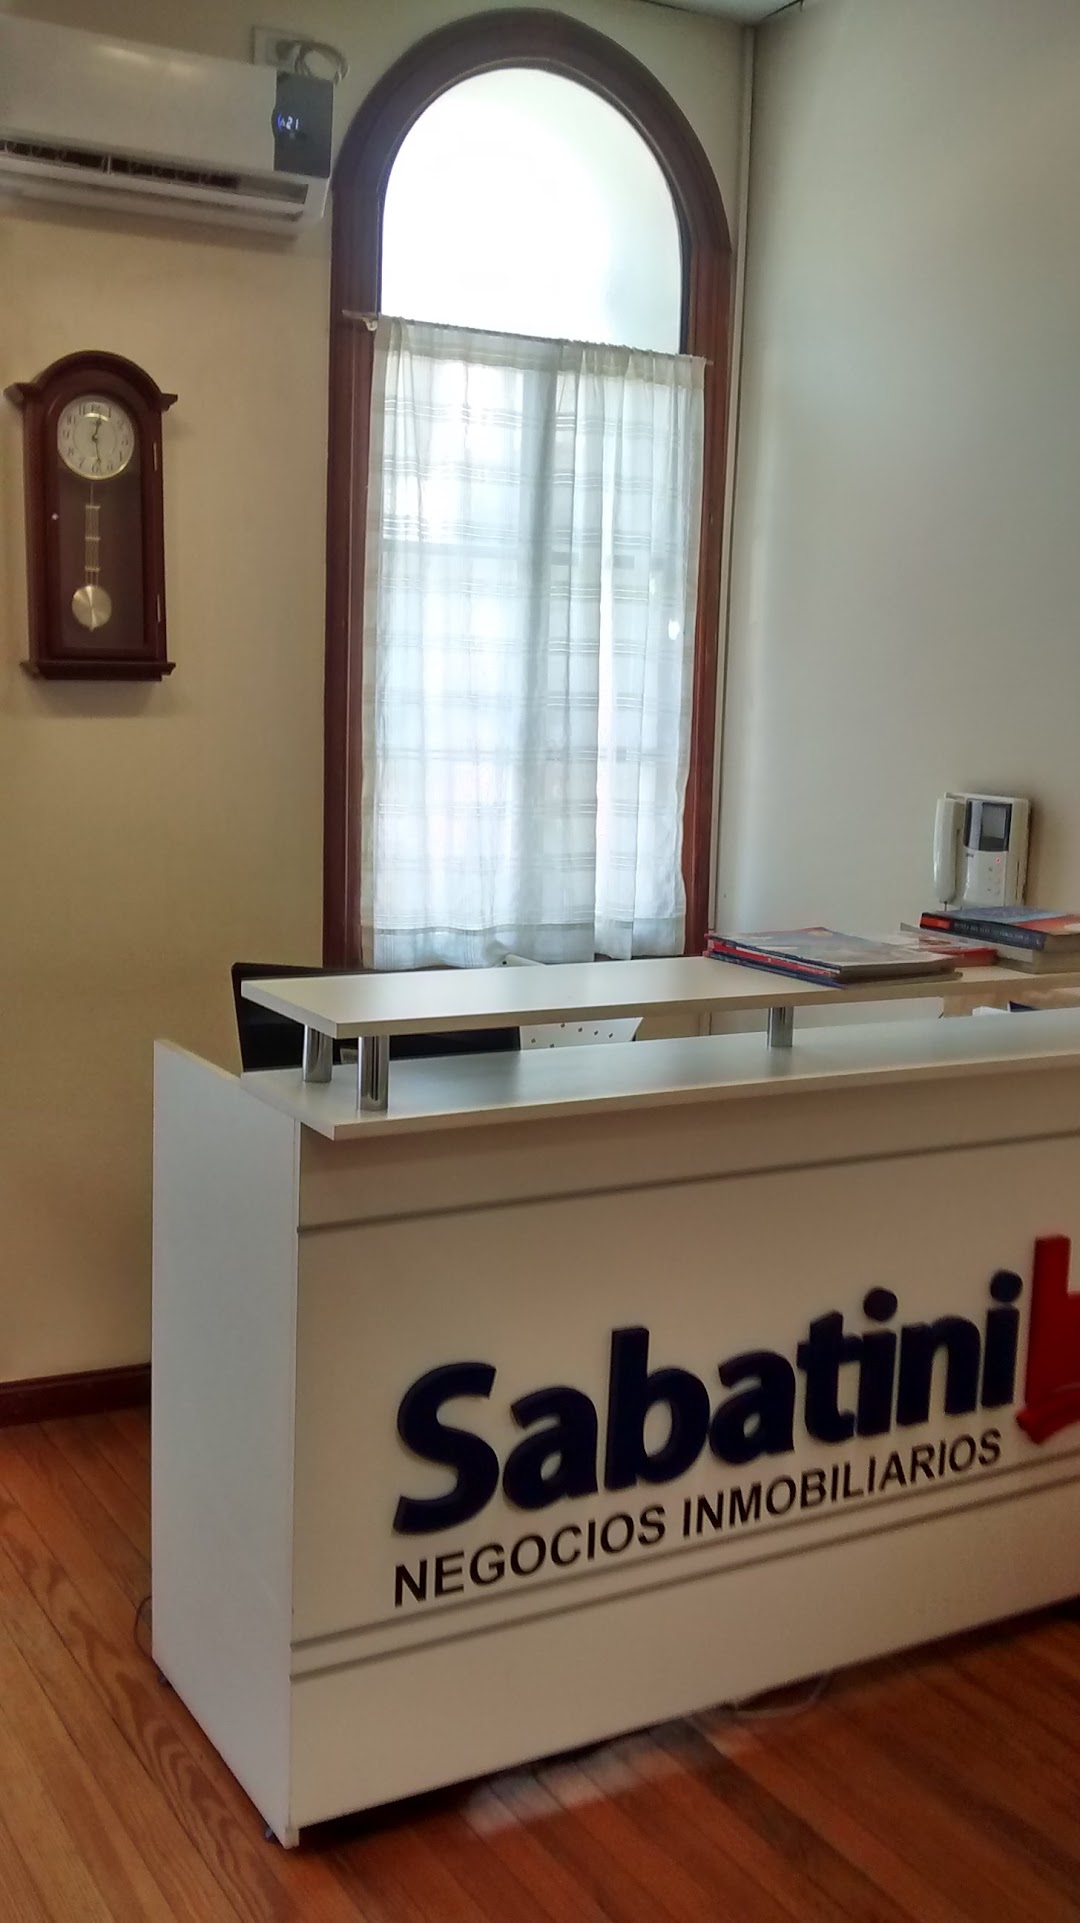 Sabatini - Negocios Inmobiliarios